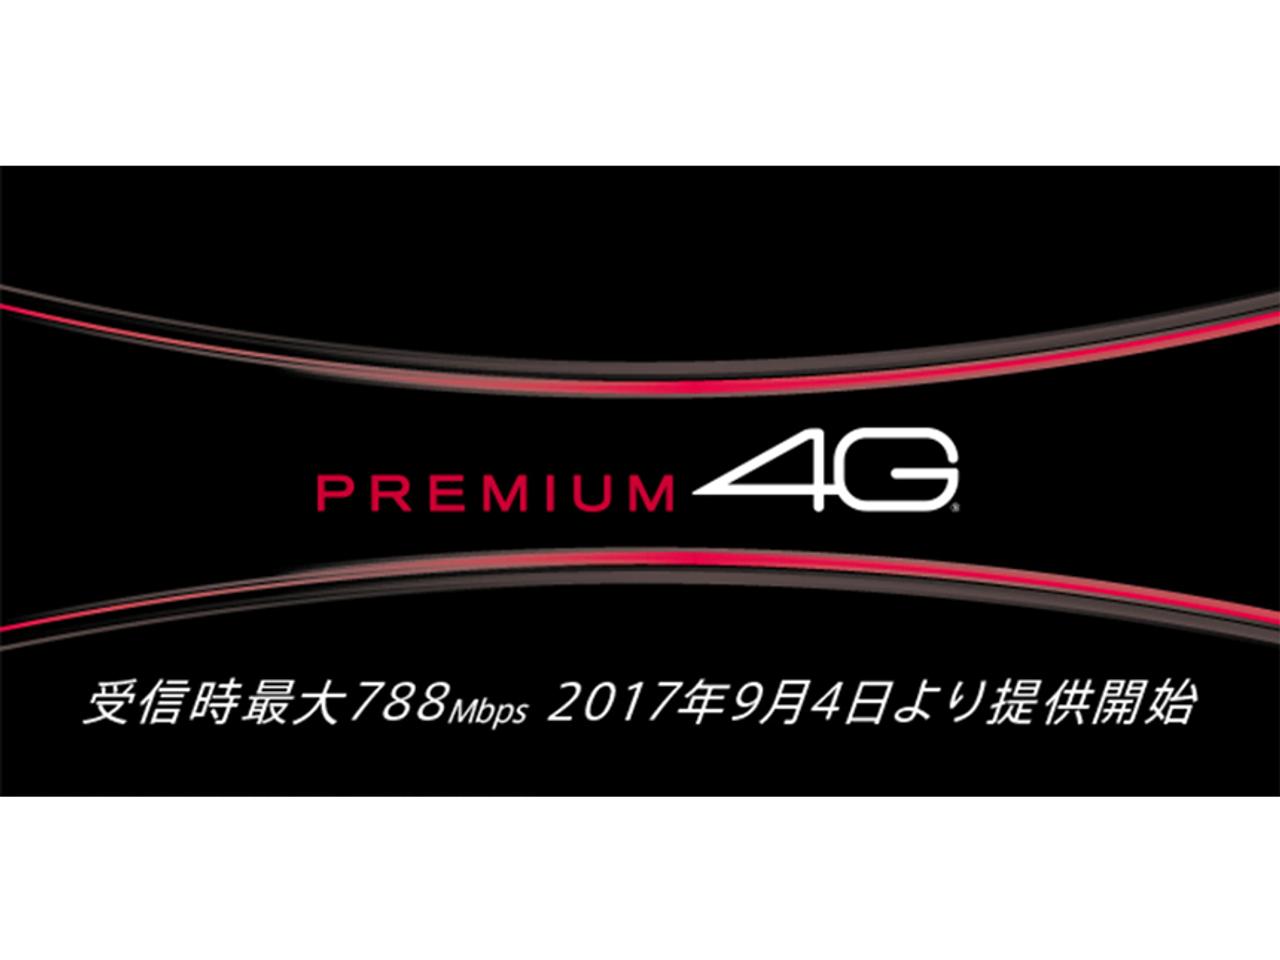 NTTドコモ、受信時最大788Mbpsの｢PREMIUM 4G｣の提供を開始。まずは東名阪から